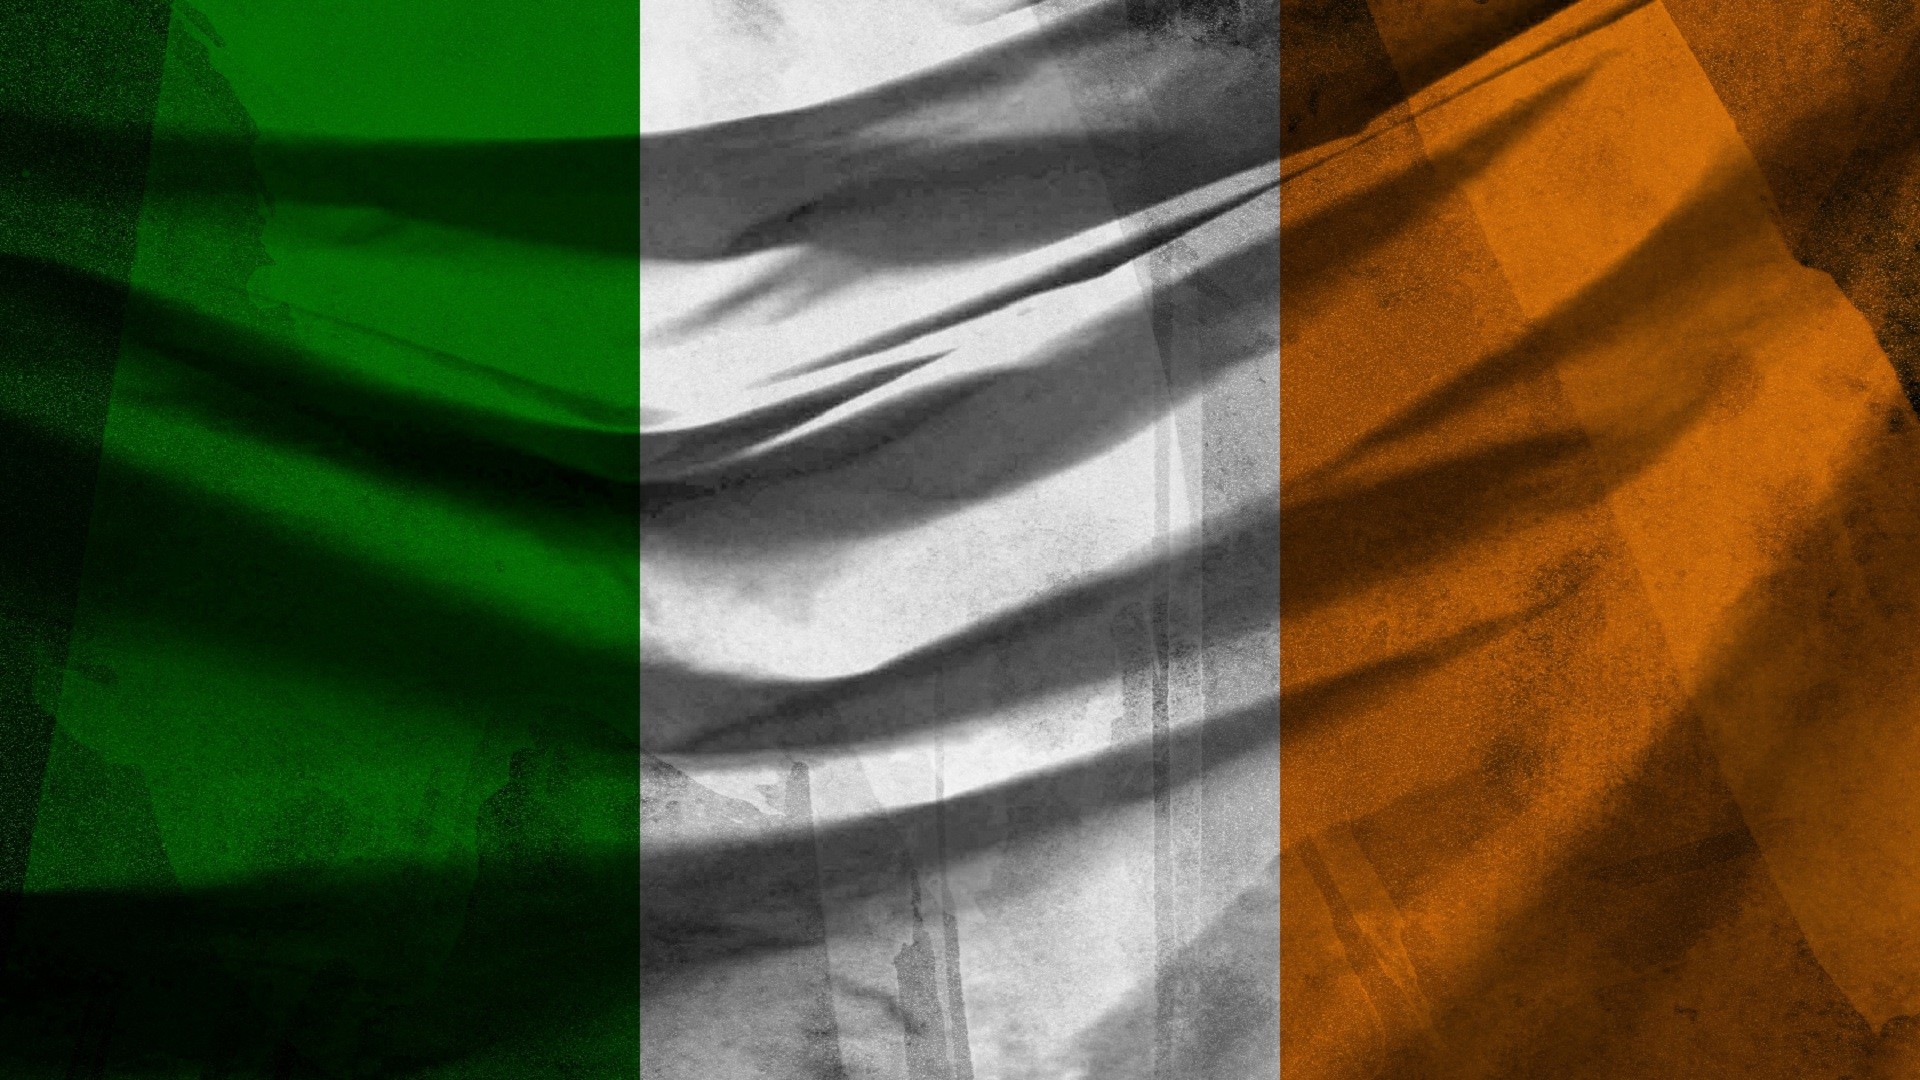 Irish Flag Wallpaper Iphone E e cf c fdf e dc fe